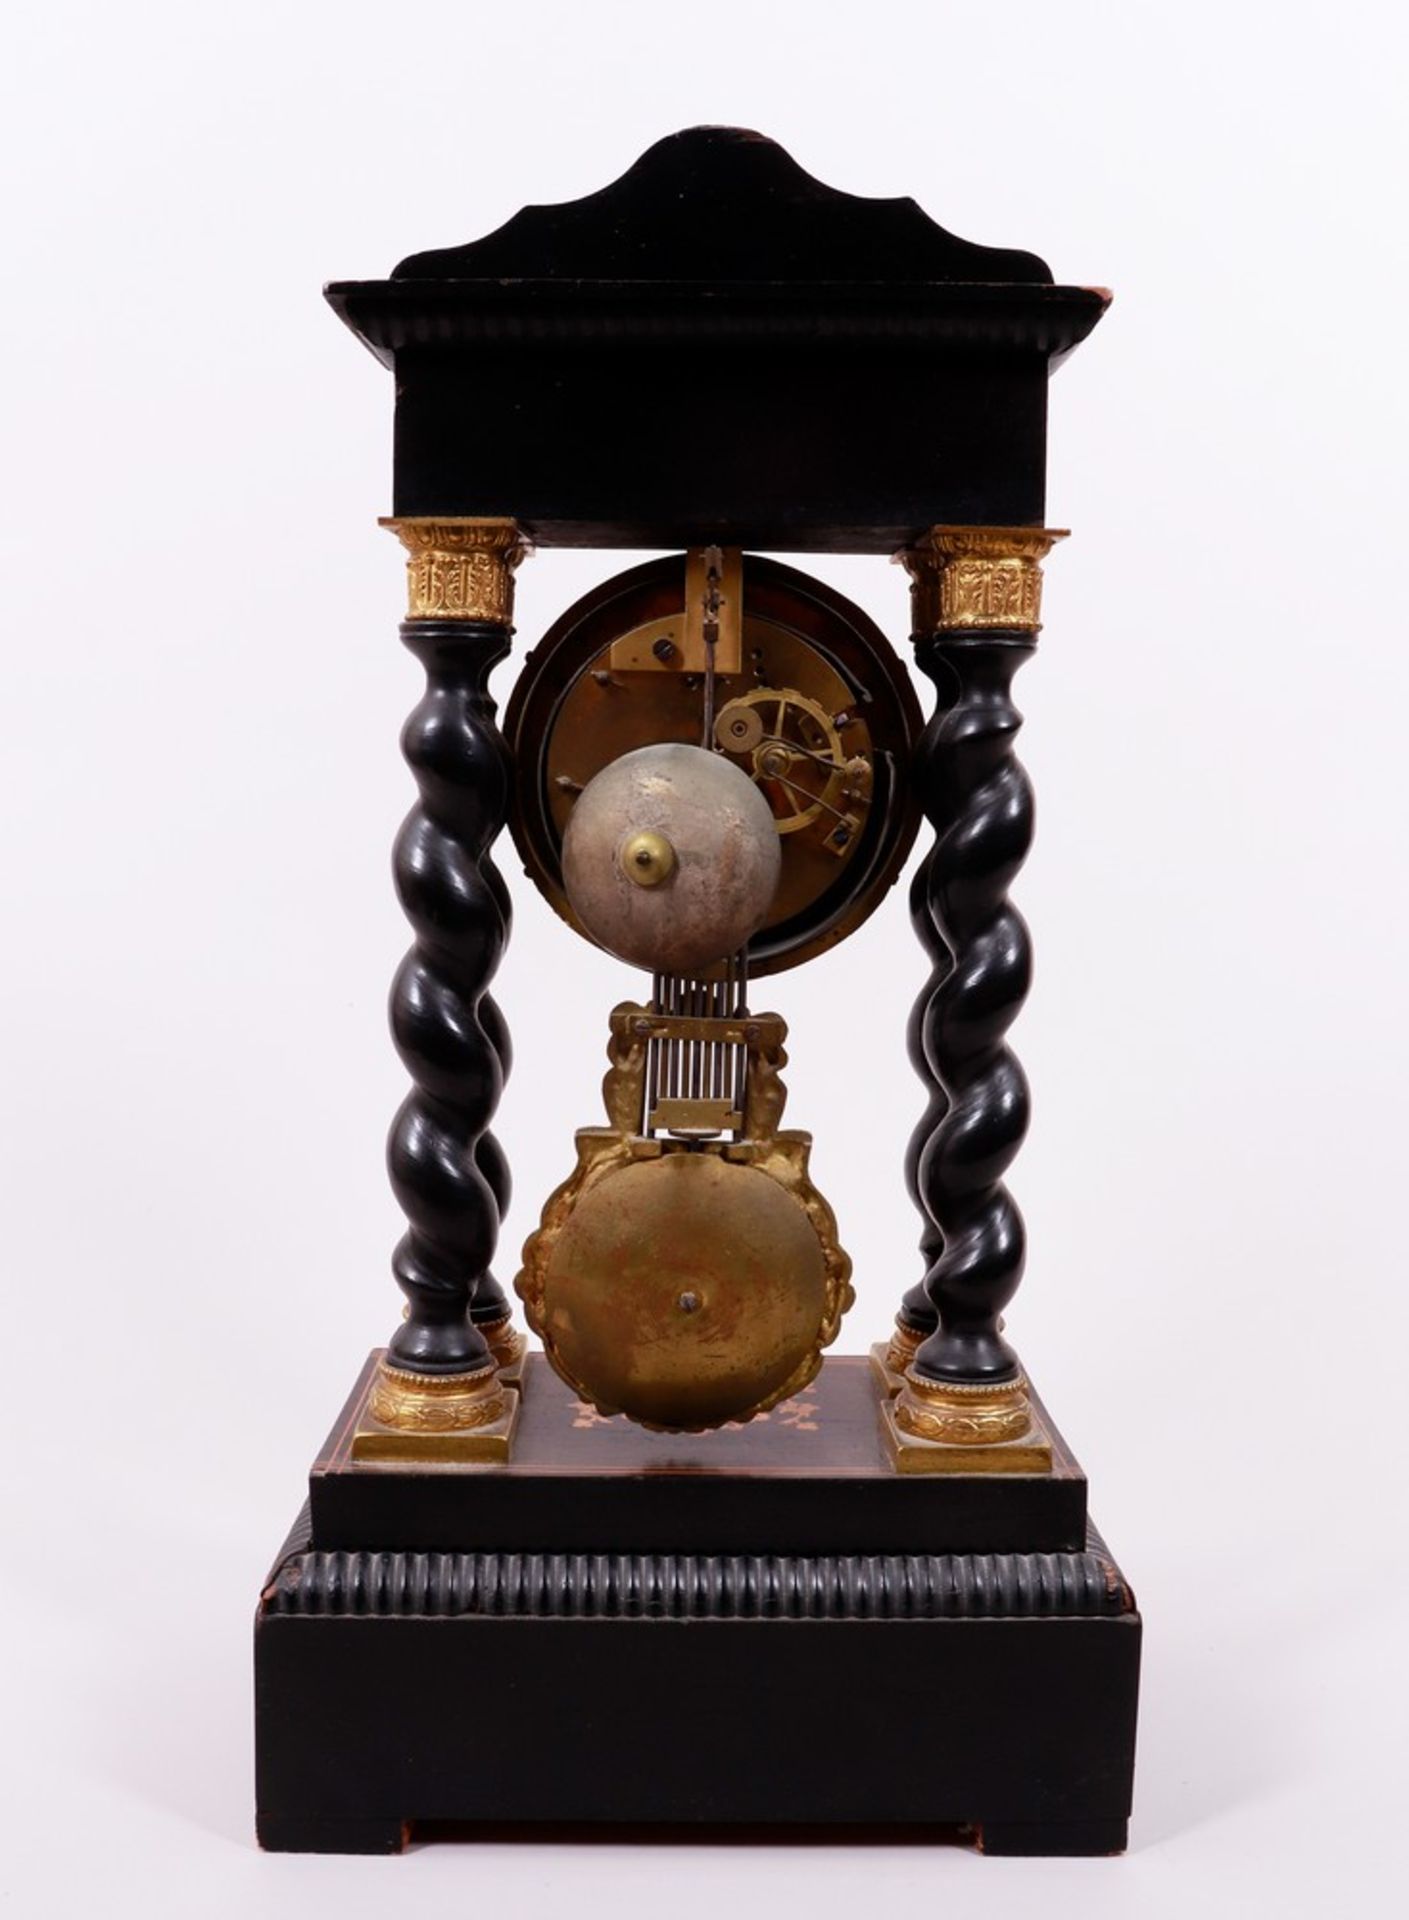 Portal clock, France, probably 1st half 19th C. - Image 5 of 6